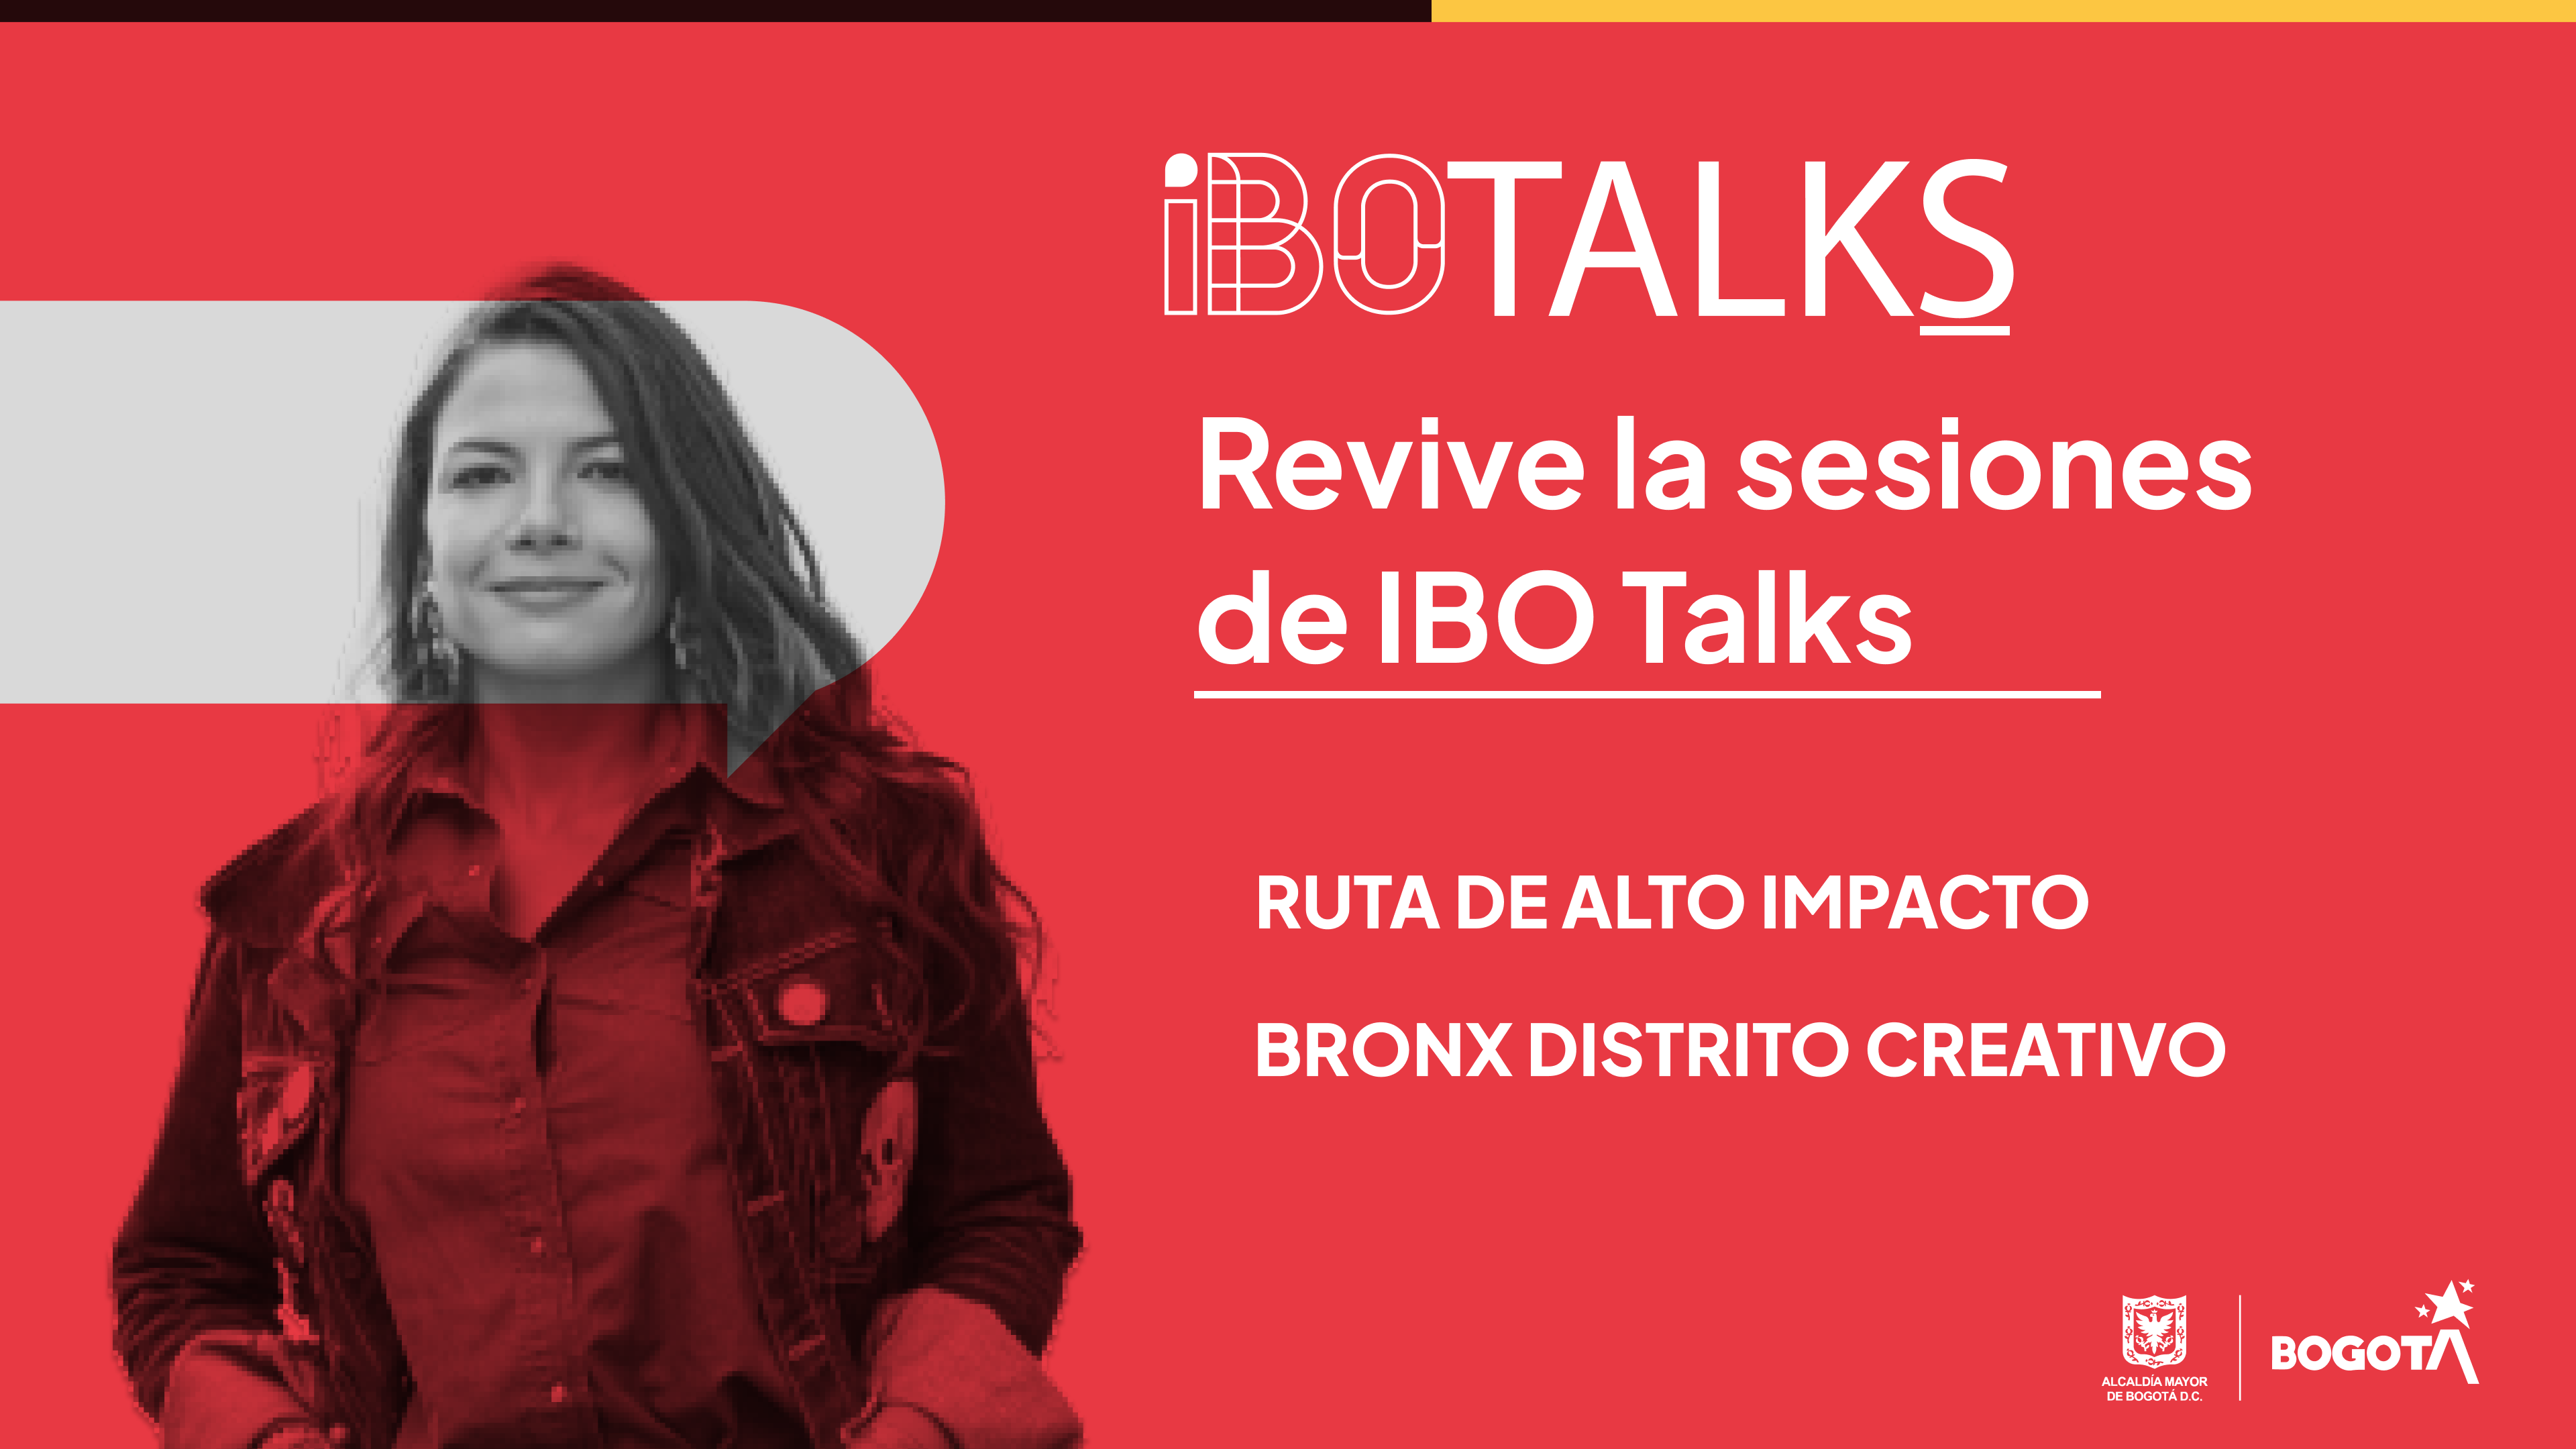 IBO talks